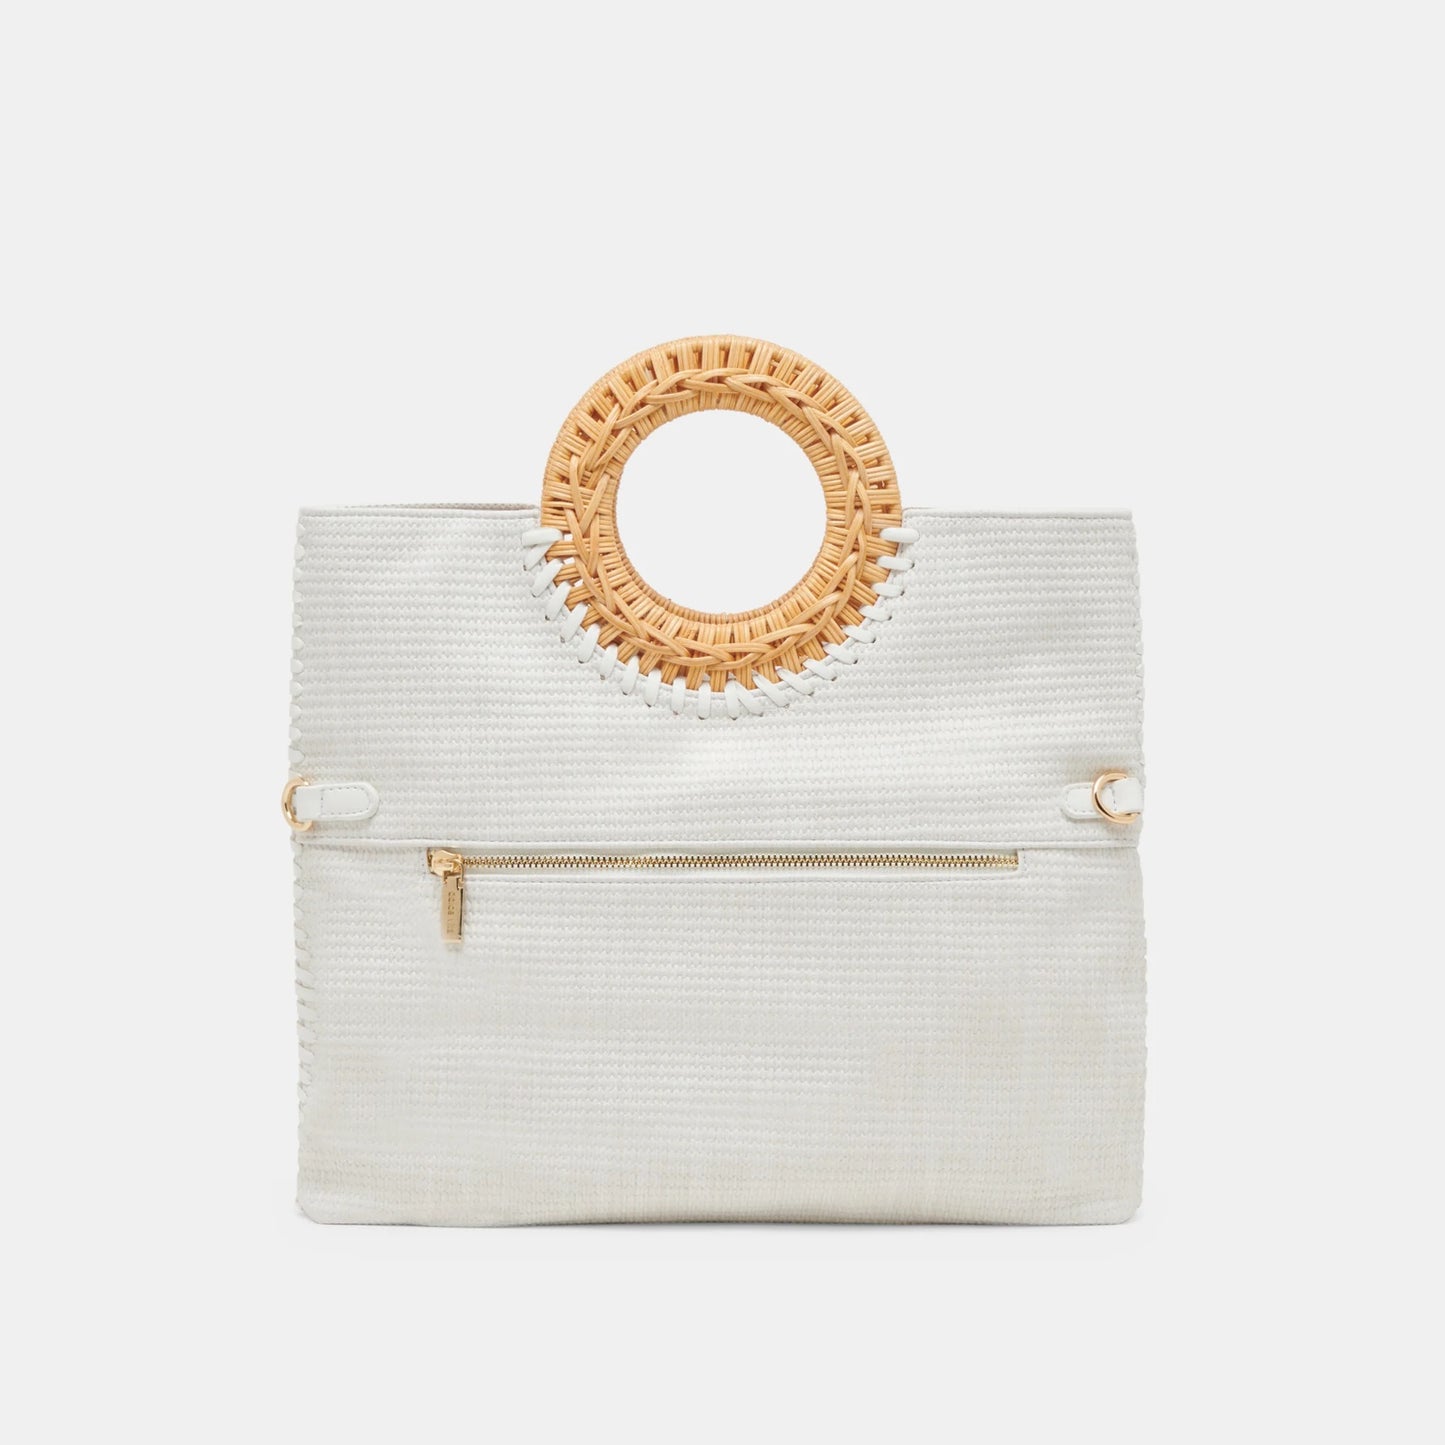 Dolce Vita Lilah Clutch Handbag - WHITE